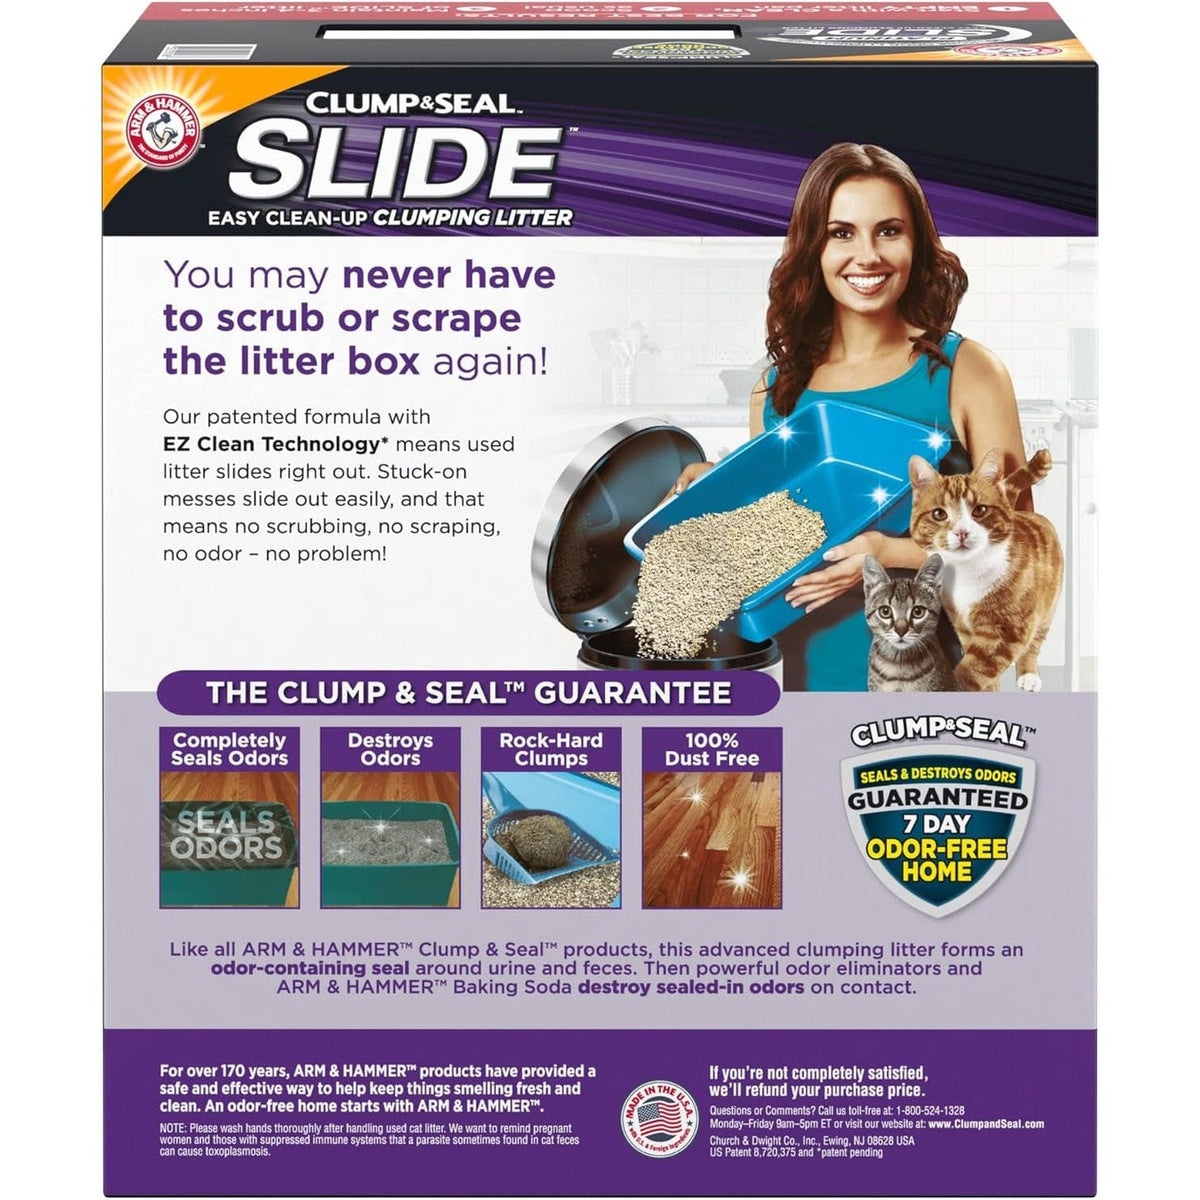 🐈‍⬛ Anti-Odor Power Slide Platinum Cat Litter ✨ 37 Lb Pets Paradise Pet Supplies